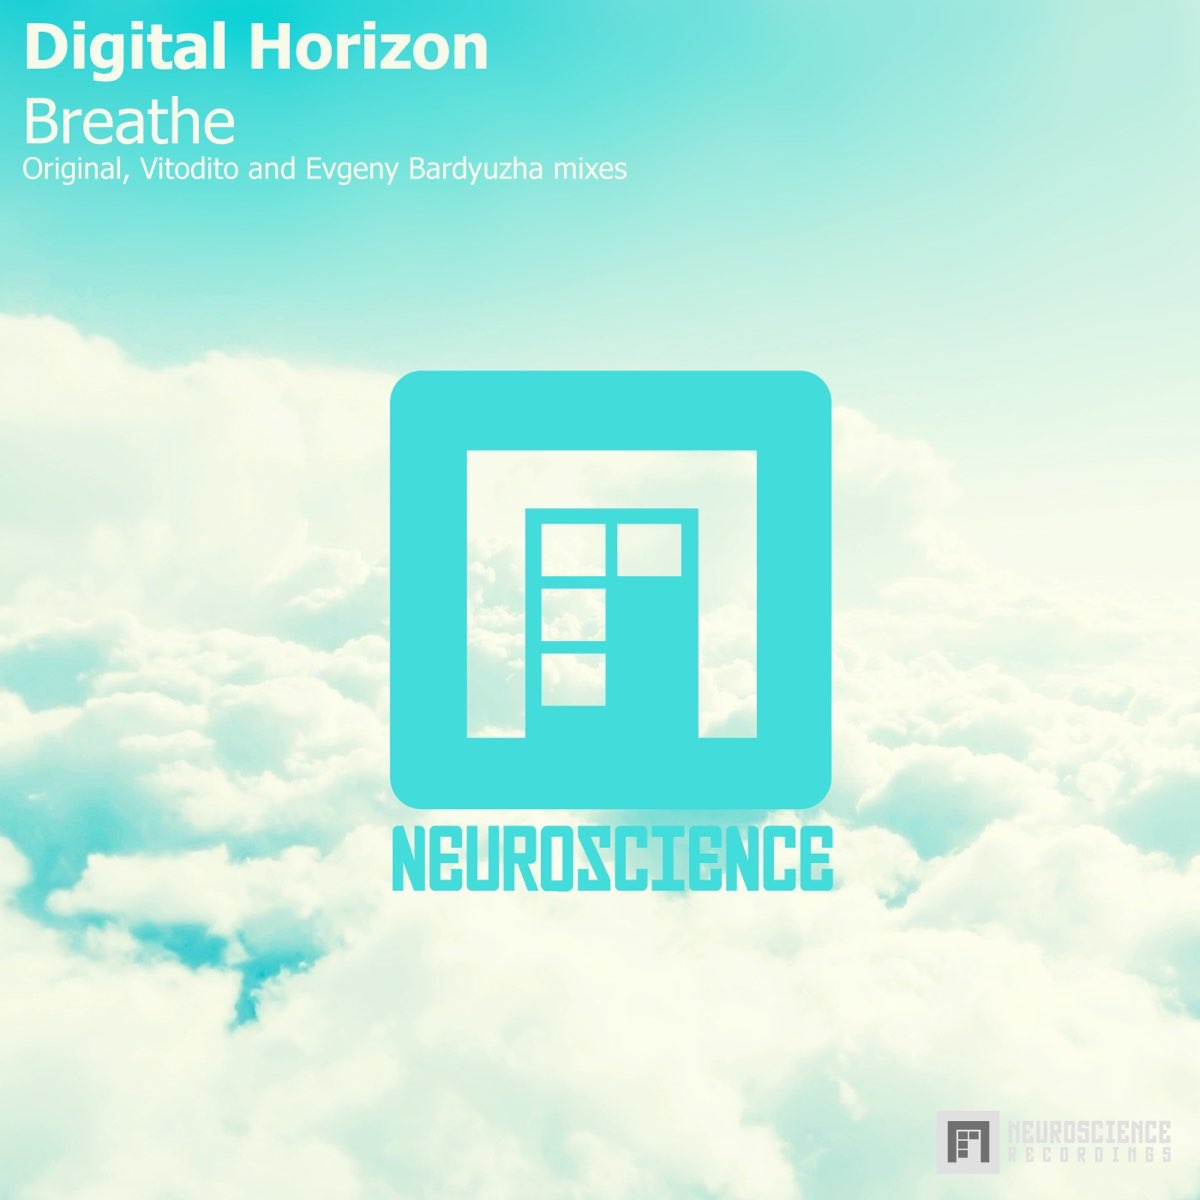 Digital horizon